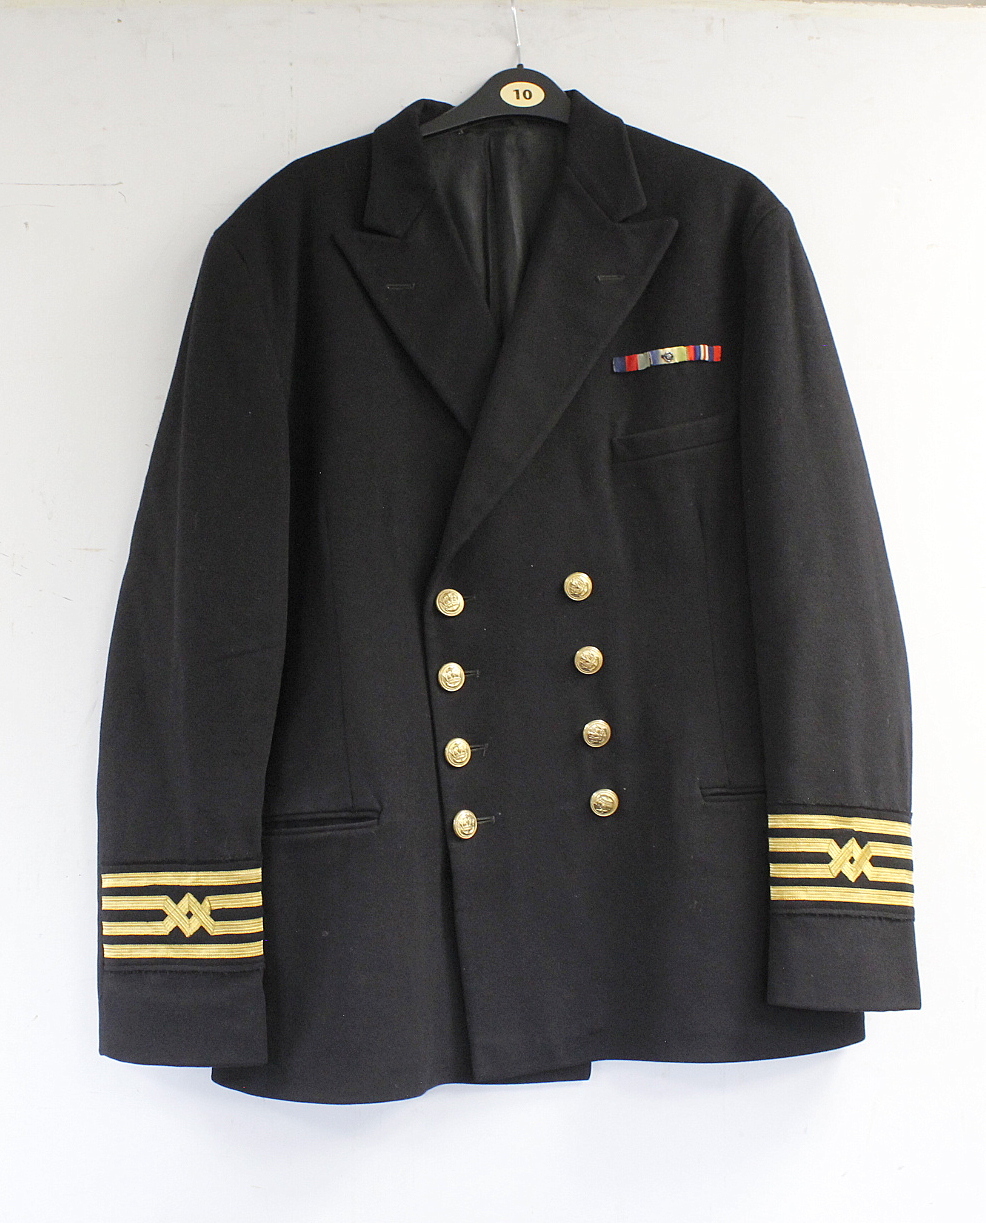 British Royal Navy dress uniform jacket having Sabre of London label, brass naval buttons by Stephen